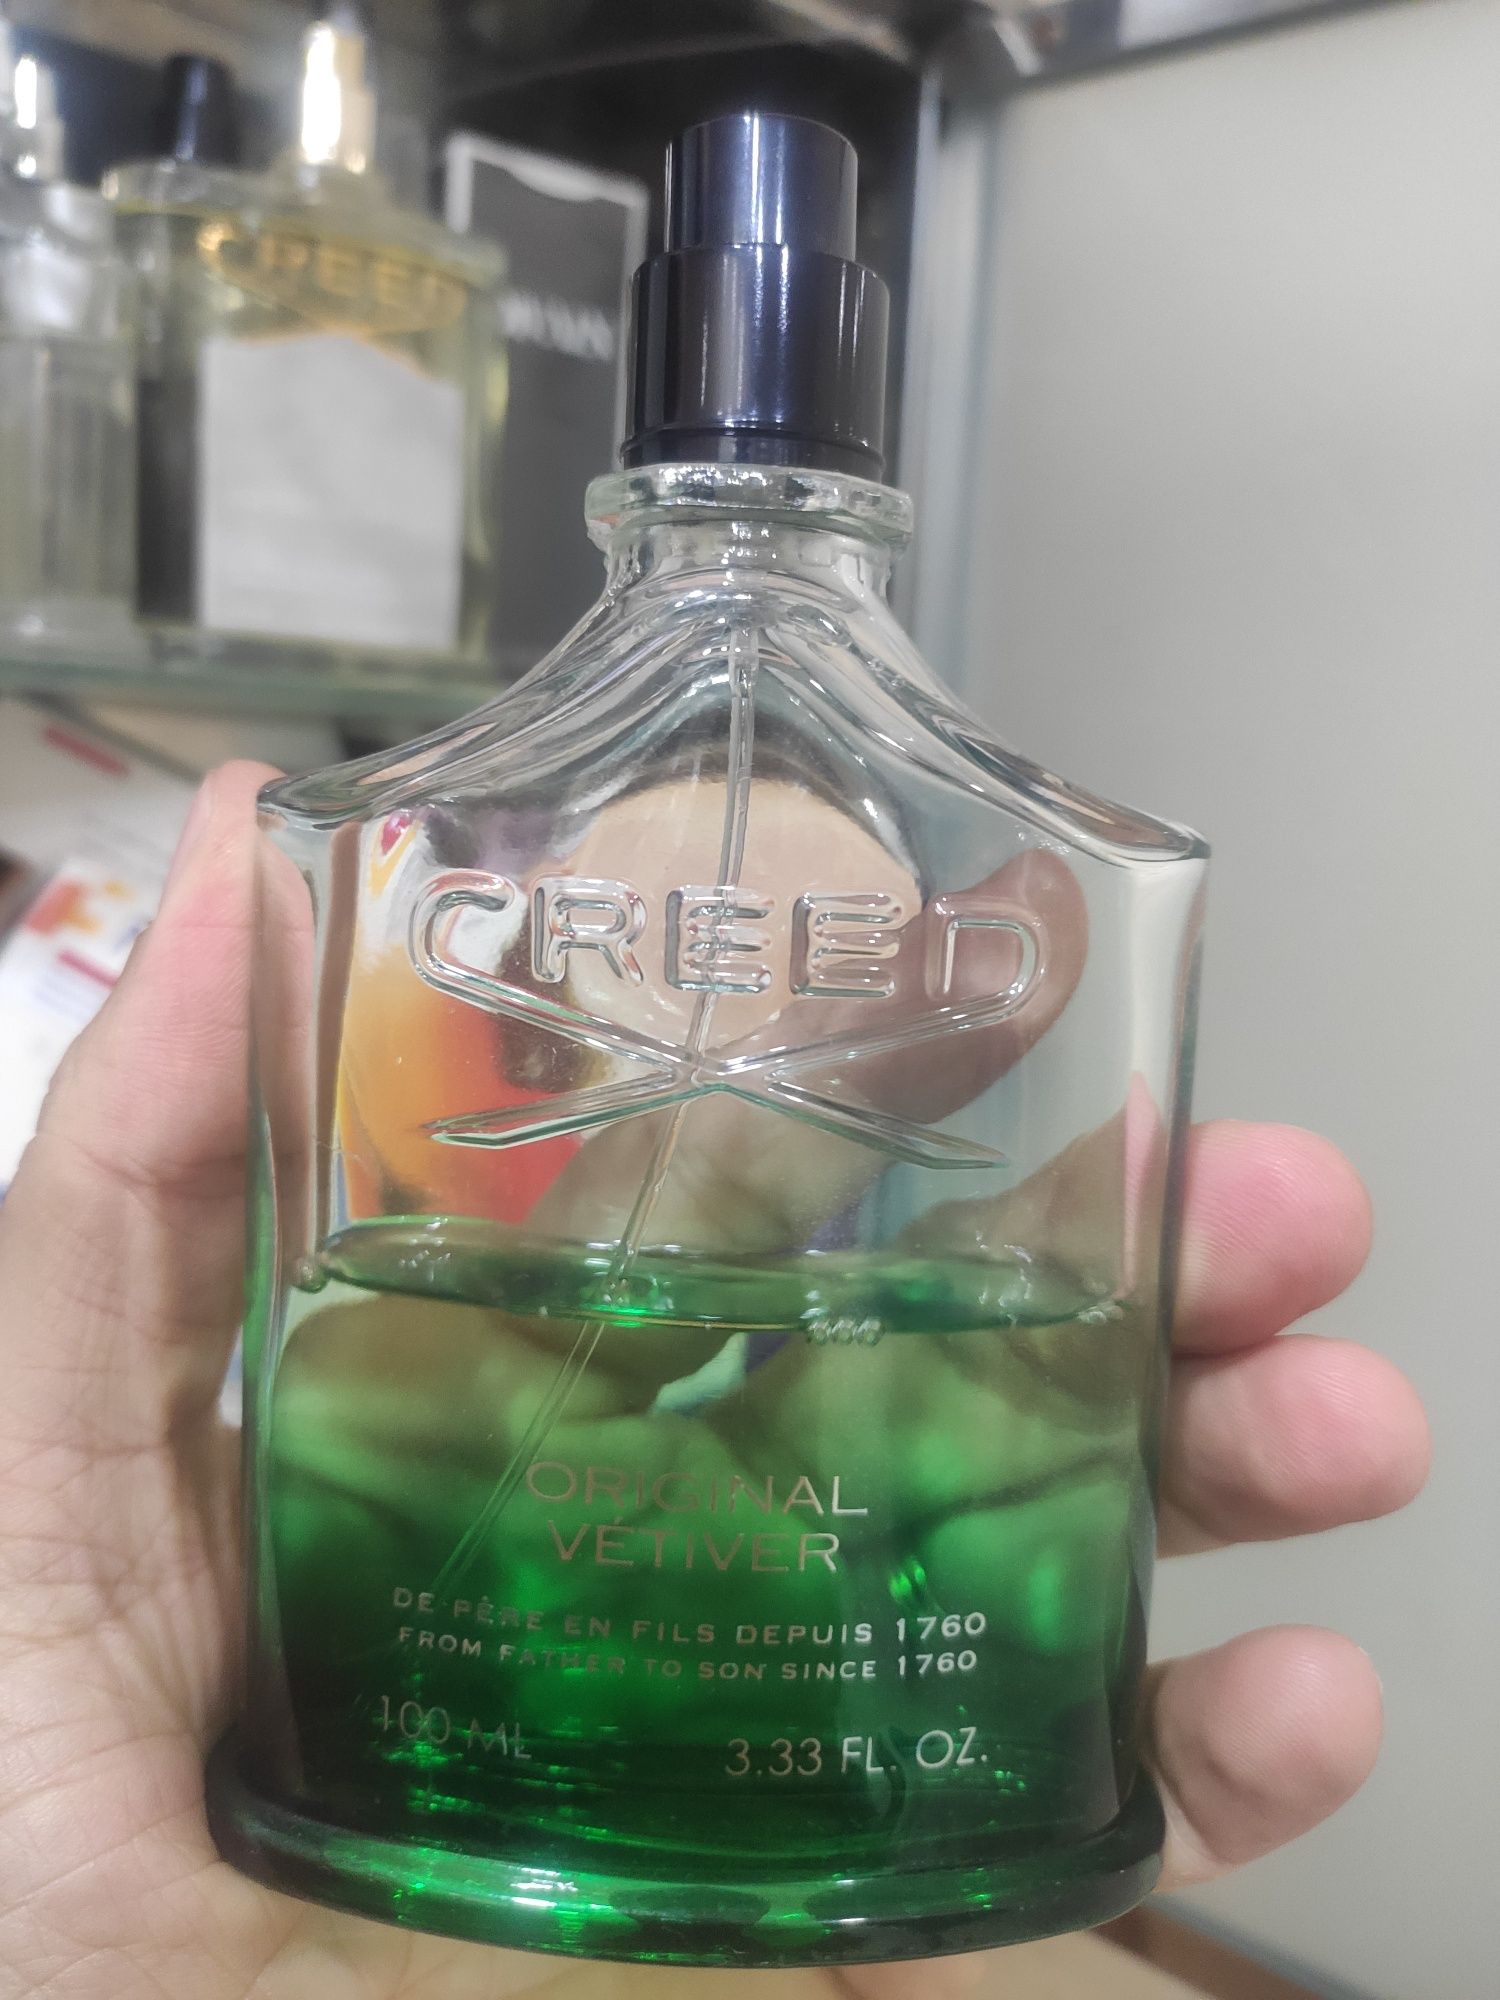 Perfume Creed original vetiver